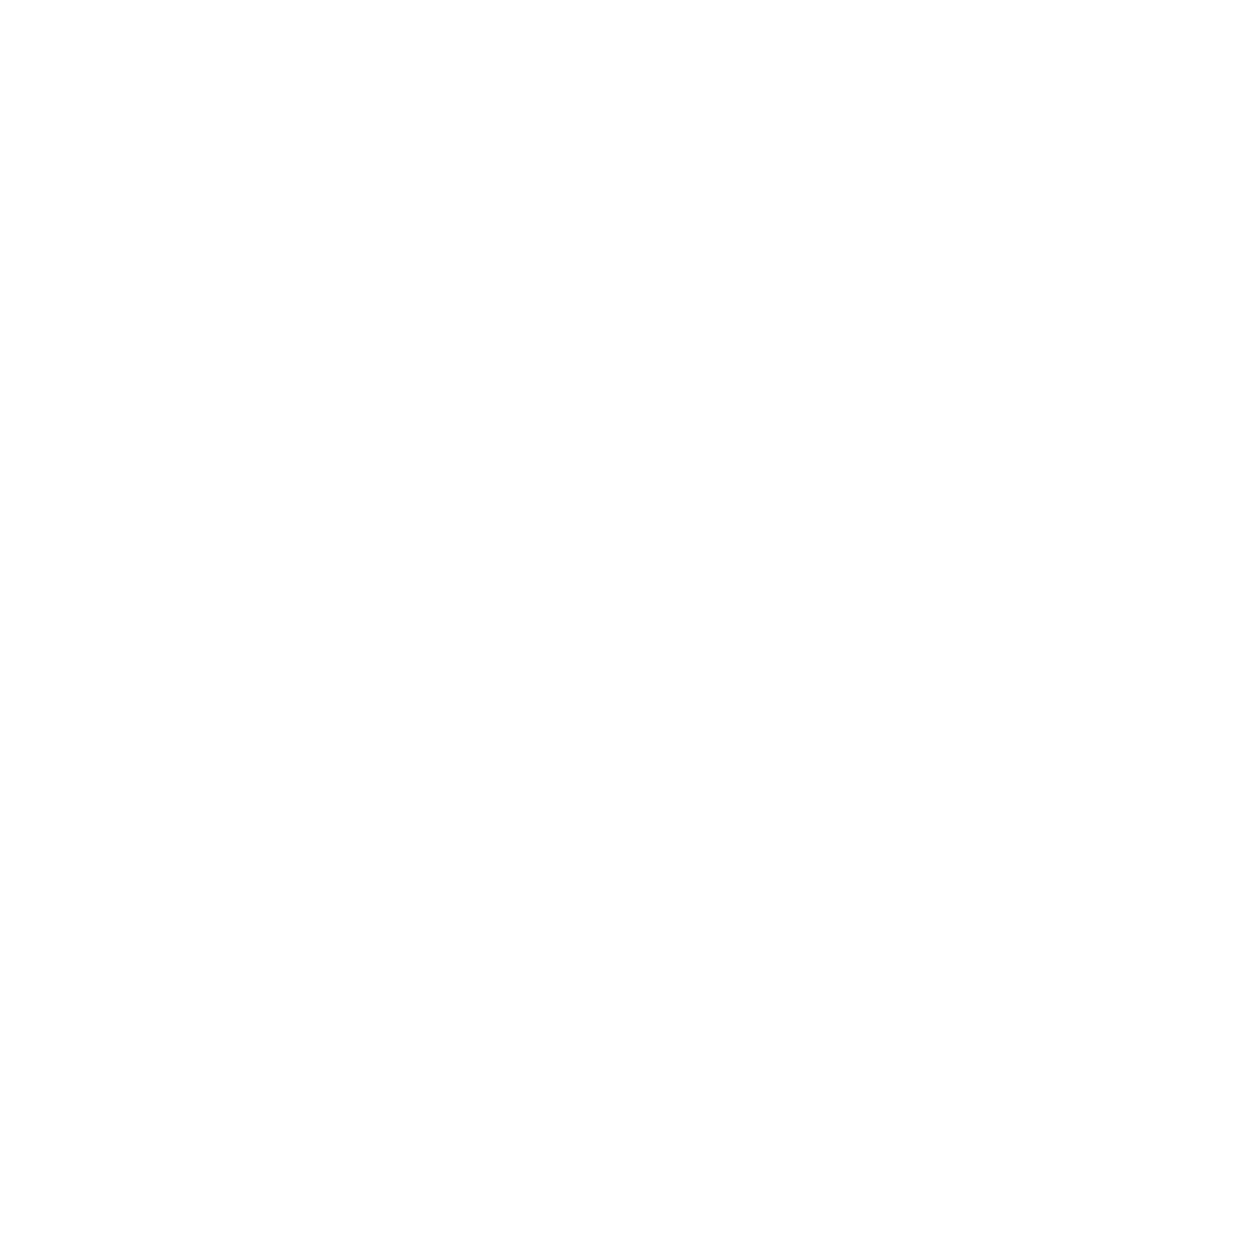 _AR STRETCH YOUR STORY